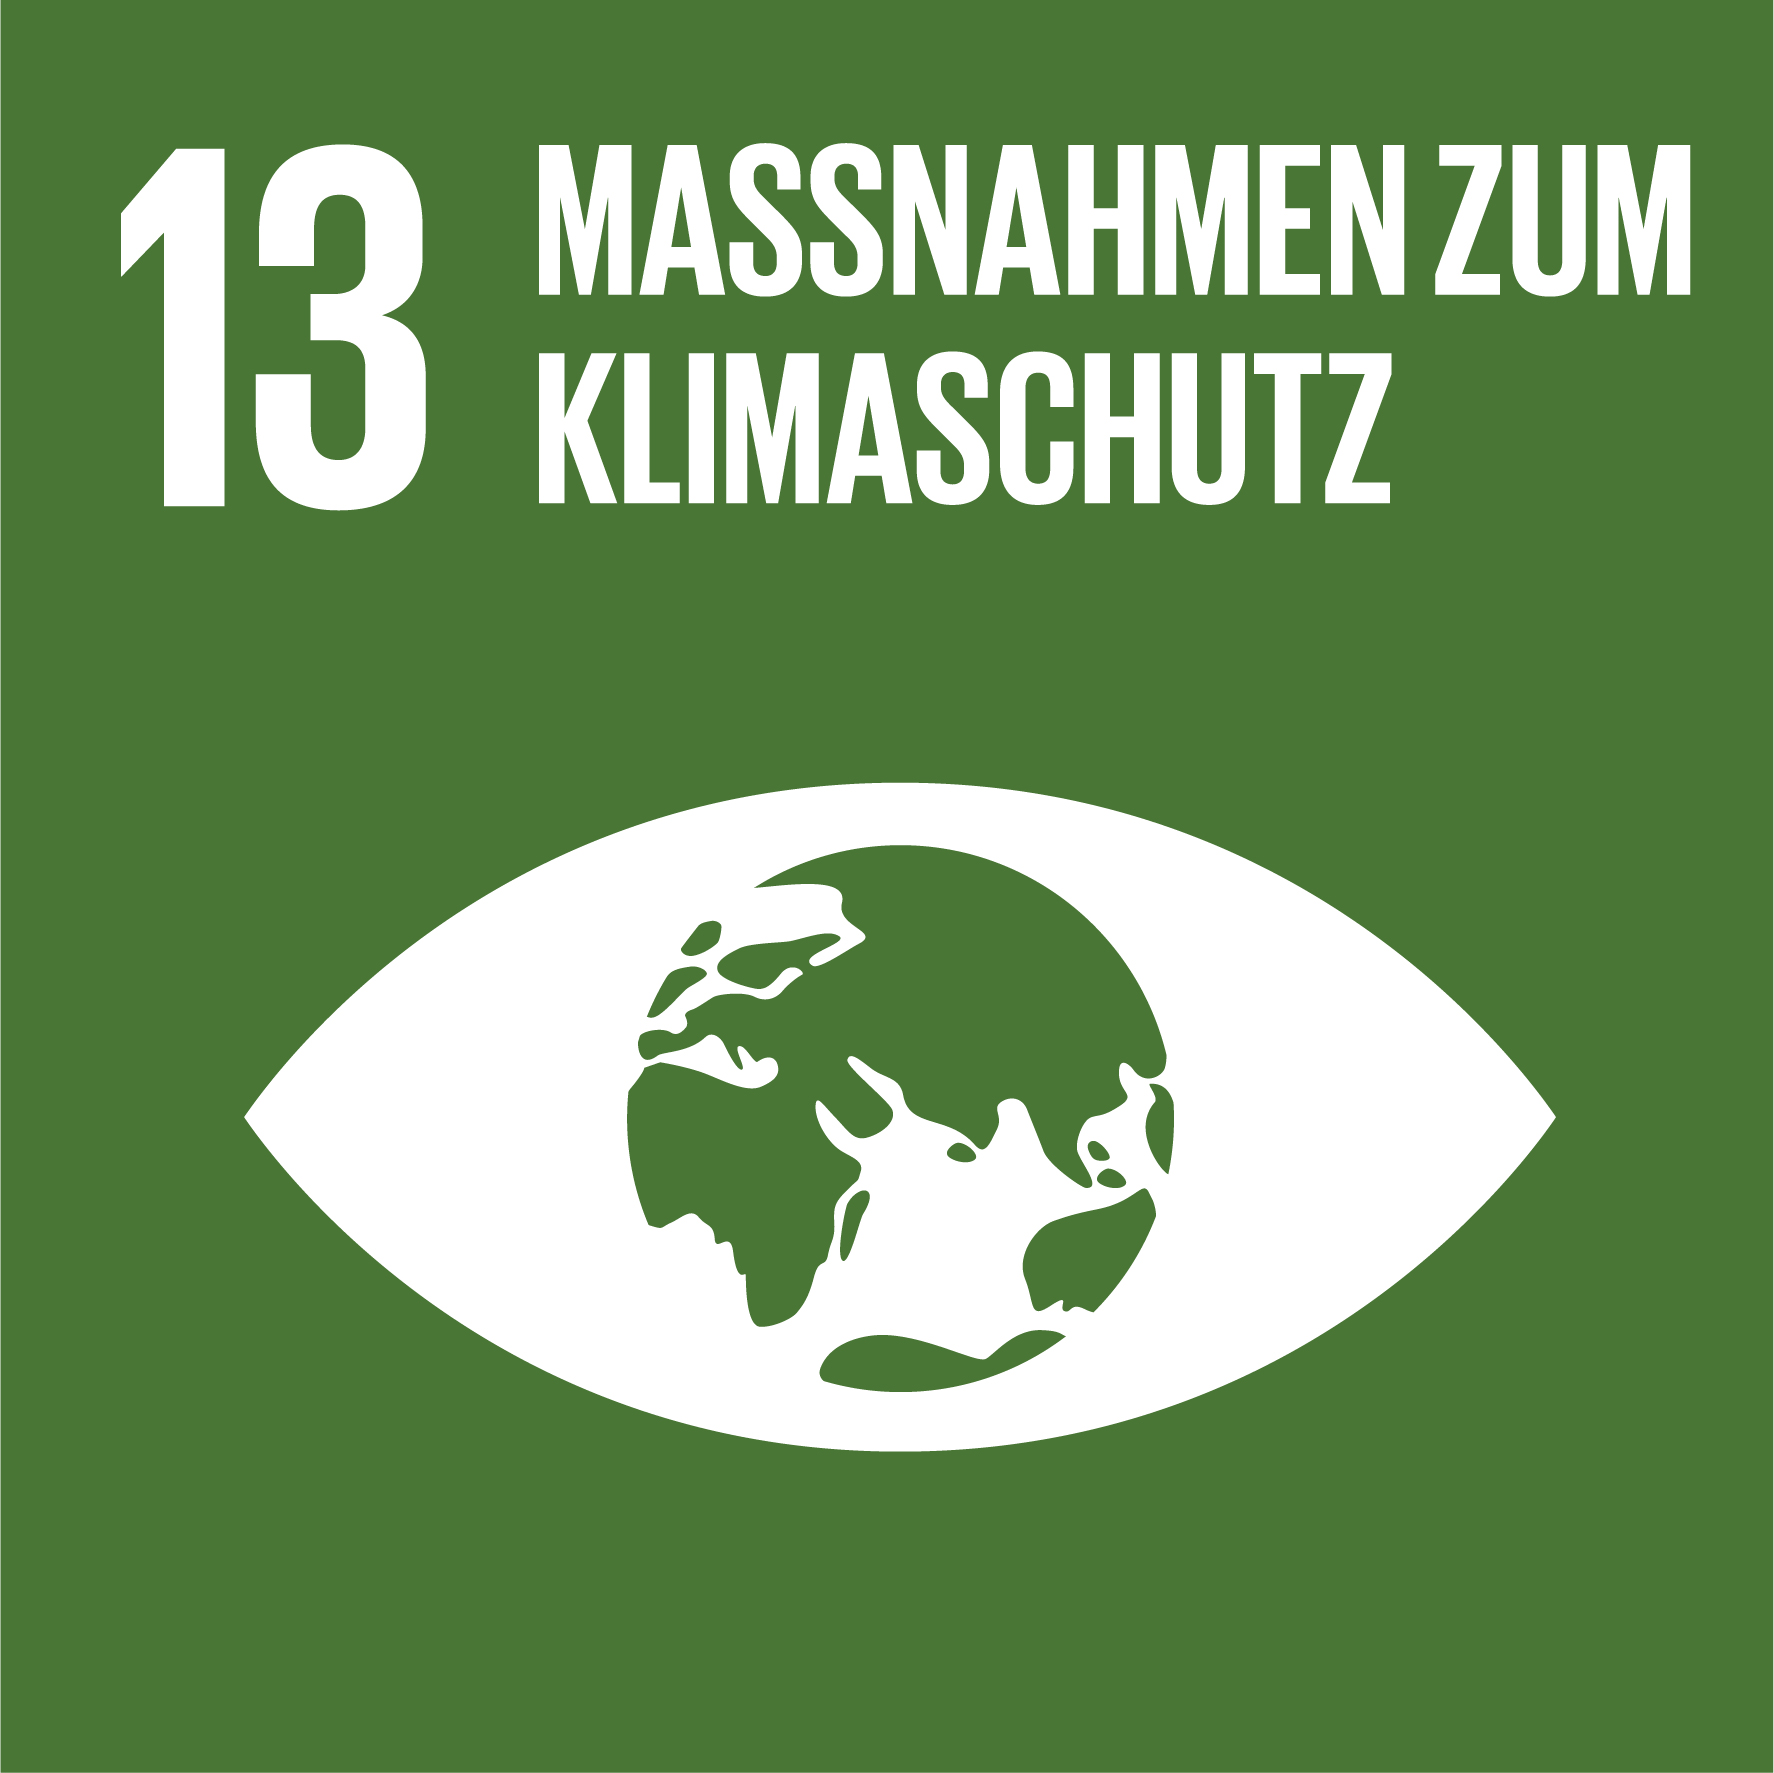 SDG 13: Maßnahmen zum Klimaschutz